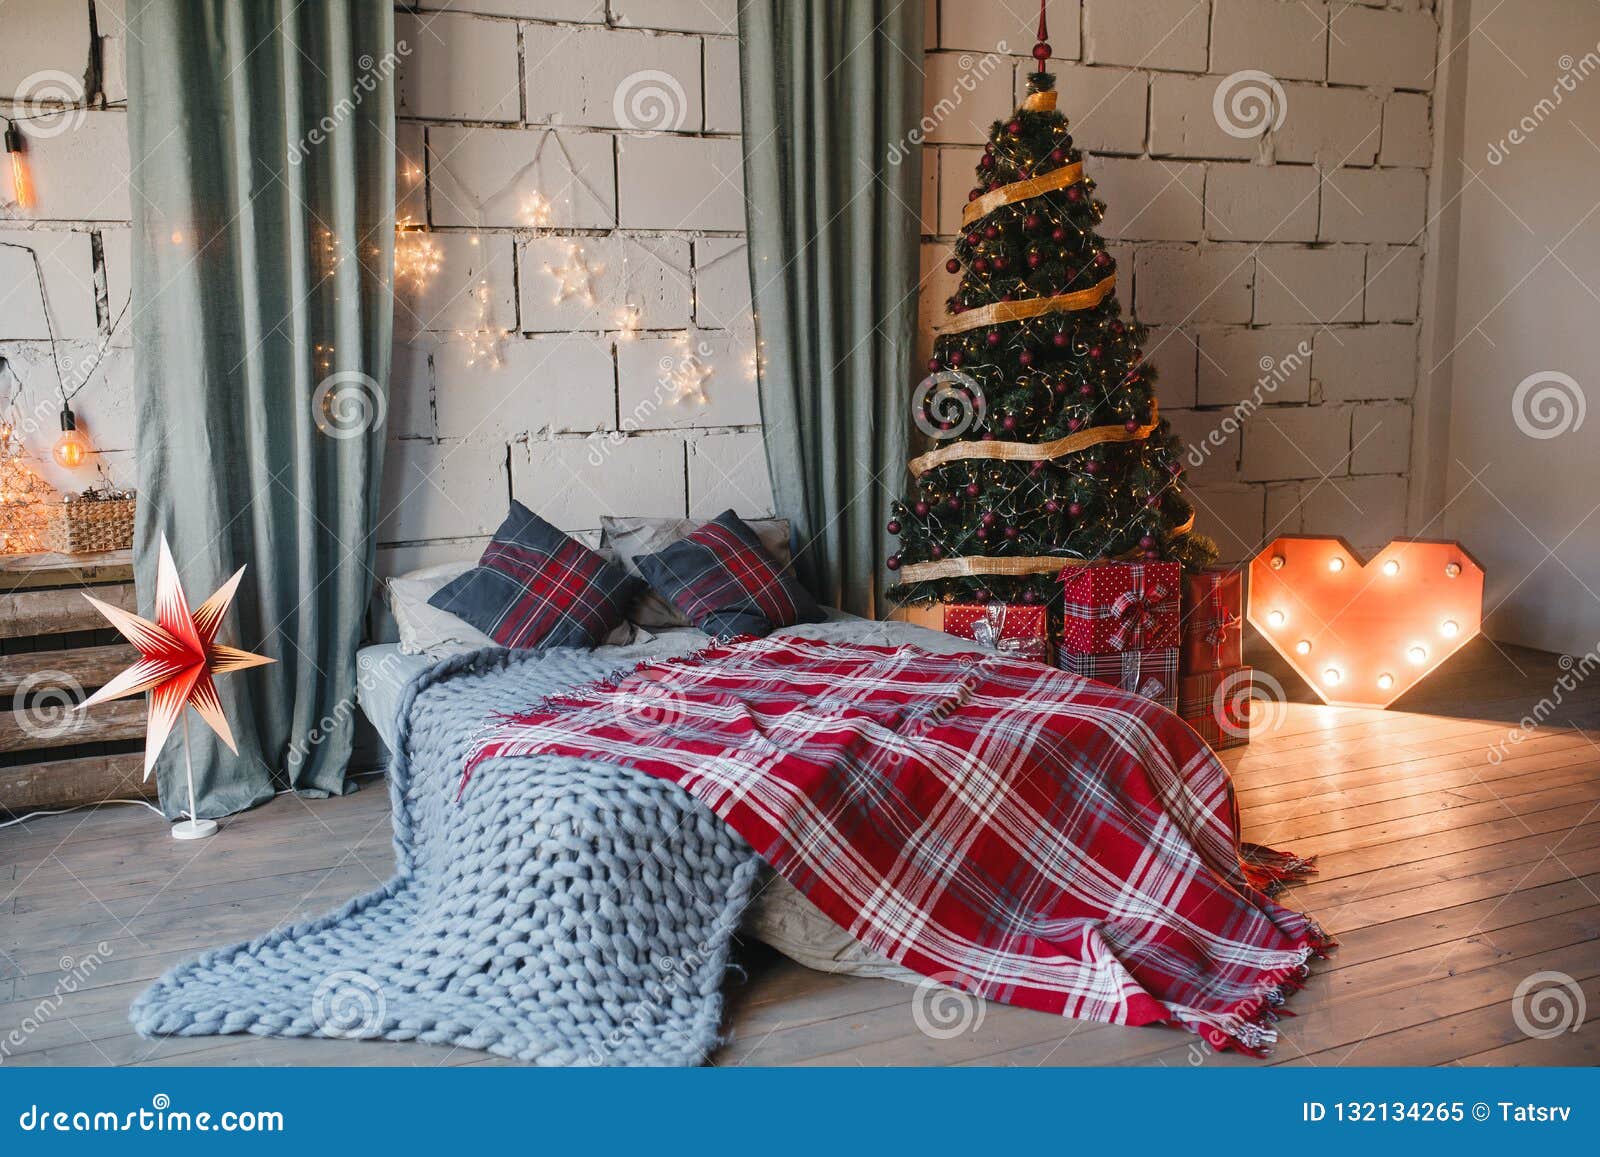 Coziness, Comfort, Interior and Holidays Concept - Cozy White Loft